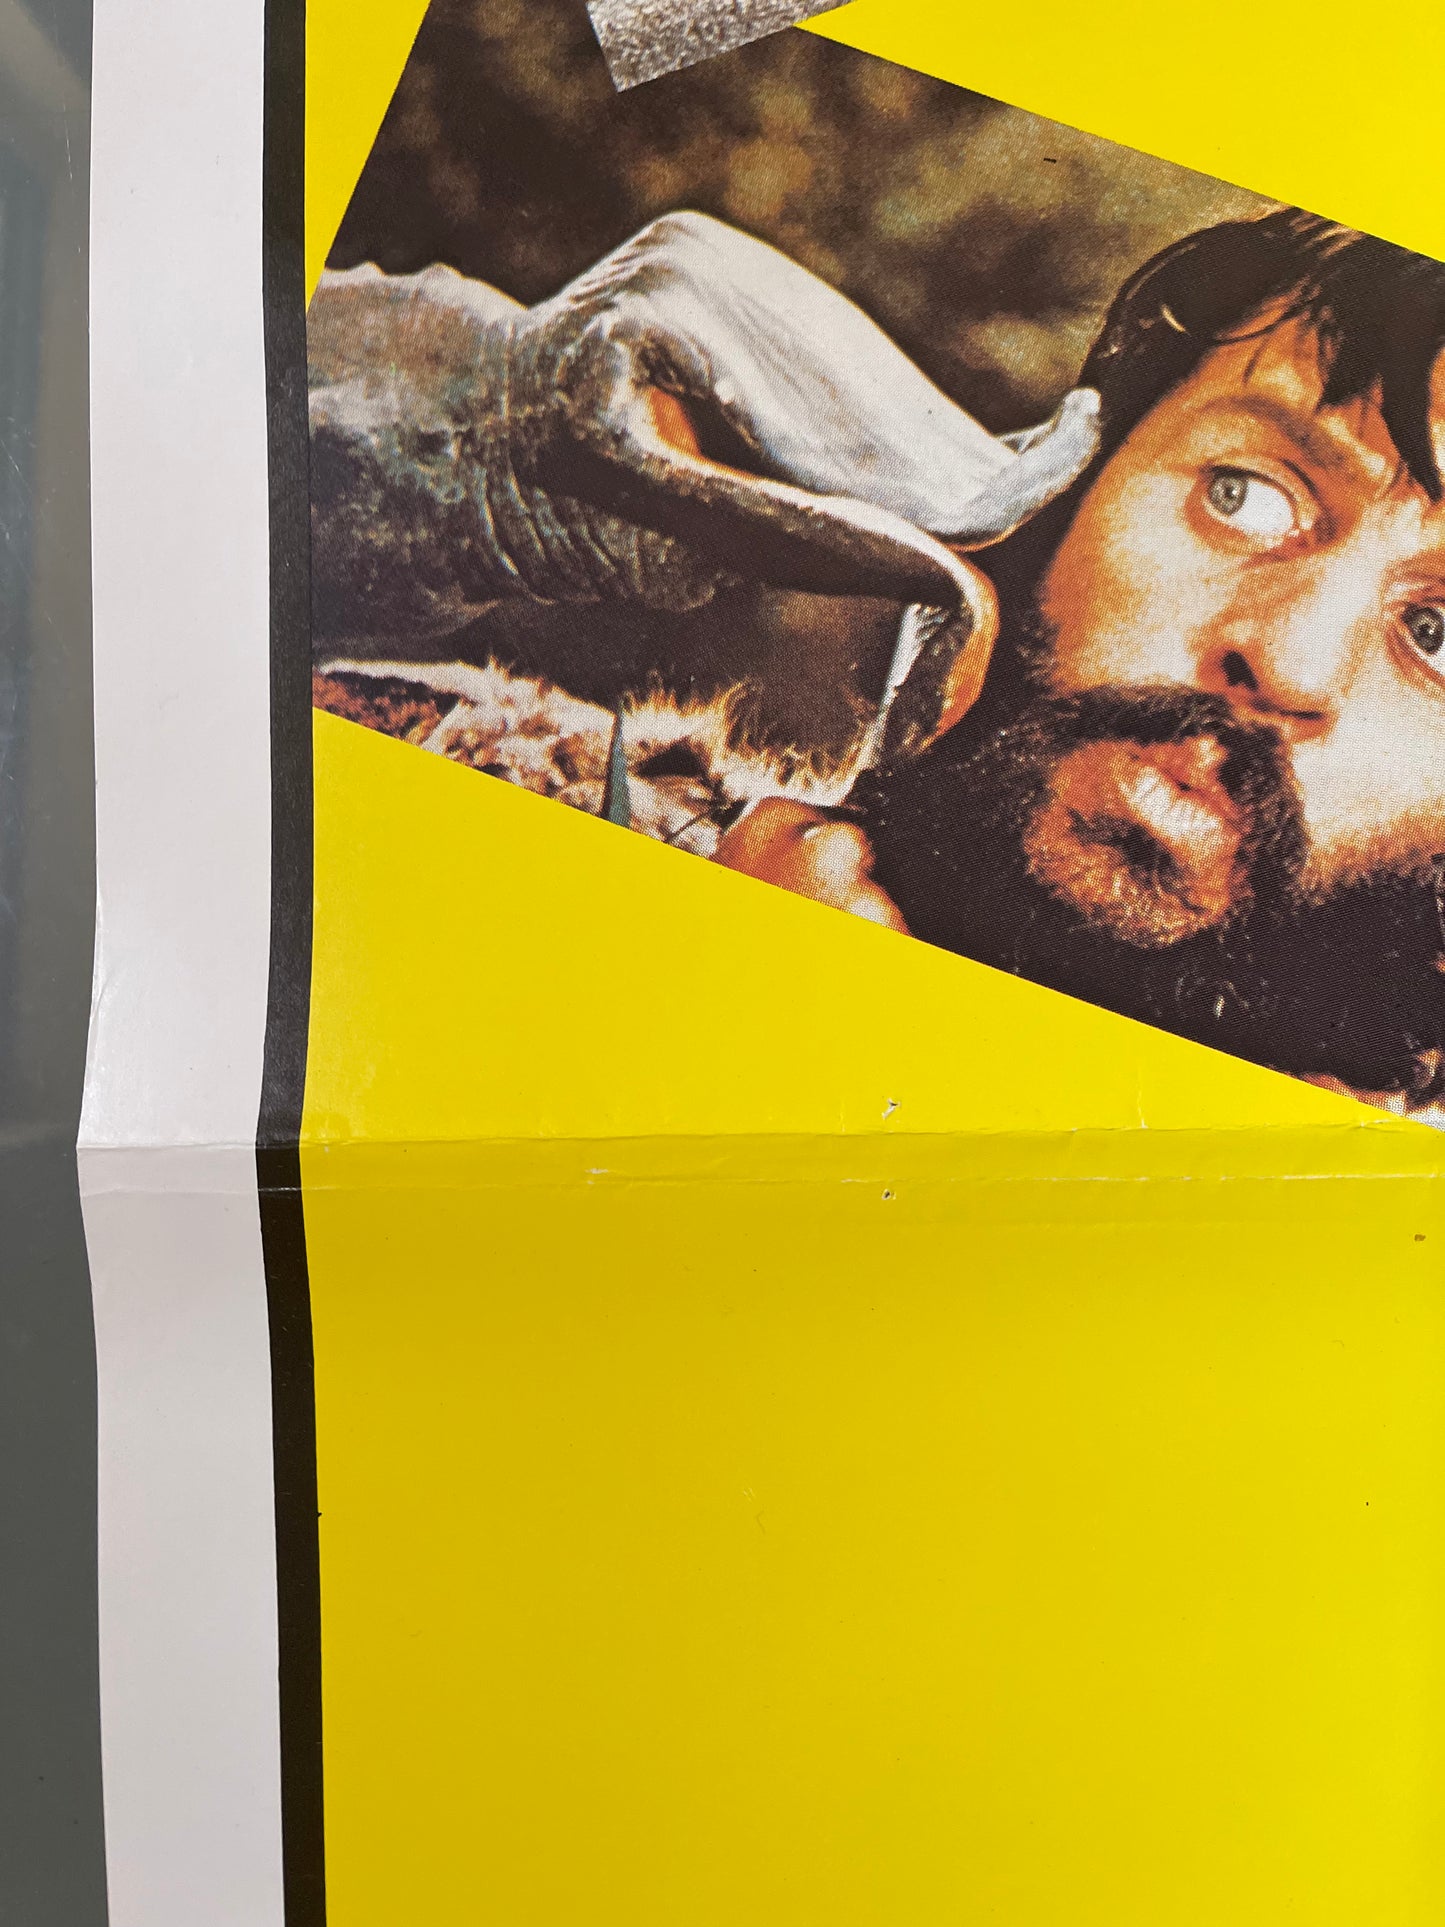 Caveman (1981) Ringo Starr - One Sheet